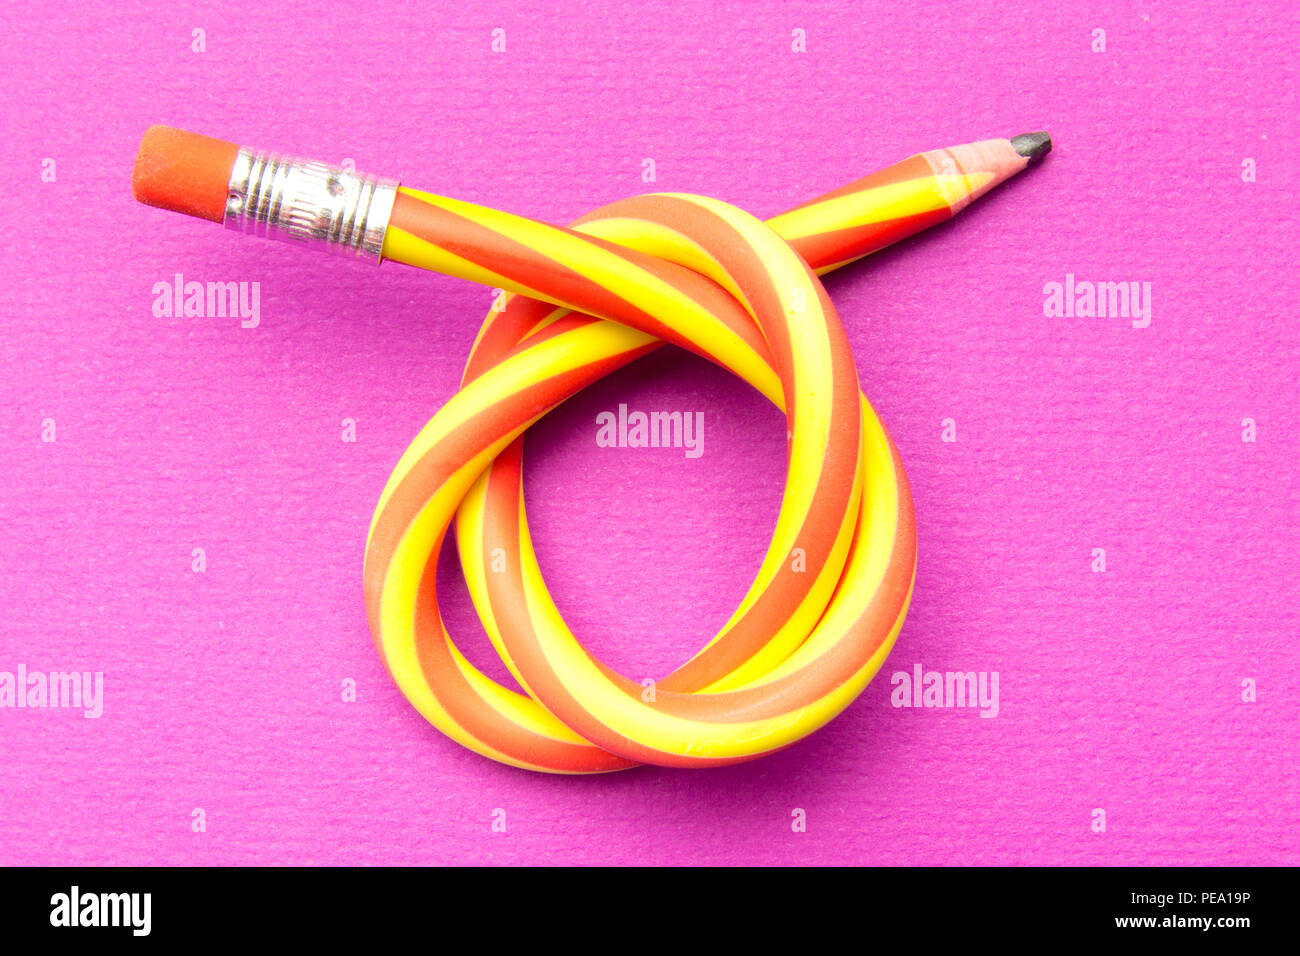 https://c8.alamy.com/comp/PEA19P/flexible-pencil-on-a-textured-cardboard-background-bent-pencils-two-color-PEA19P.jpg